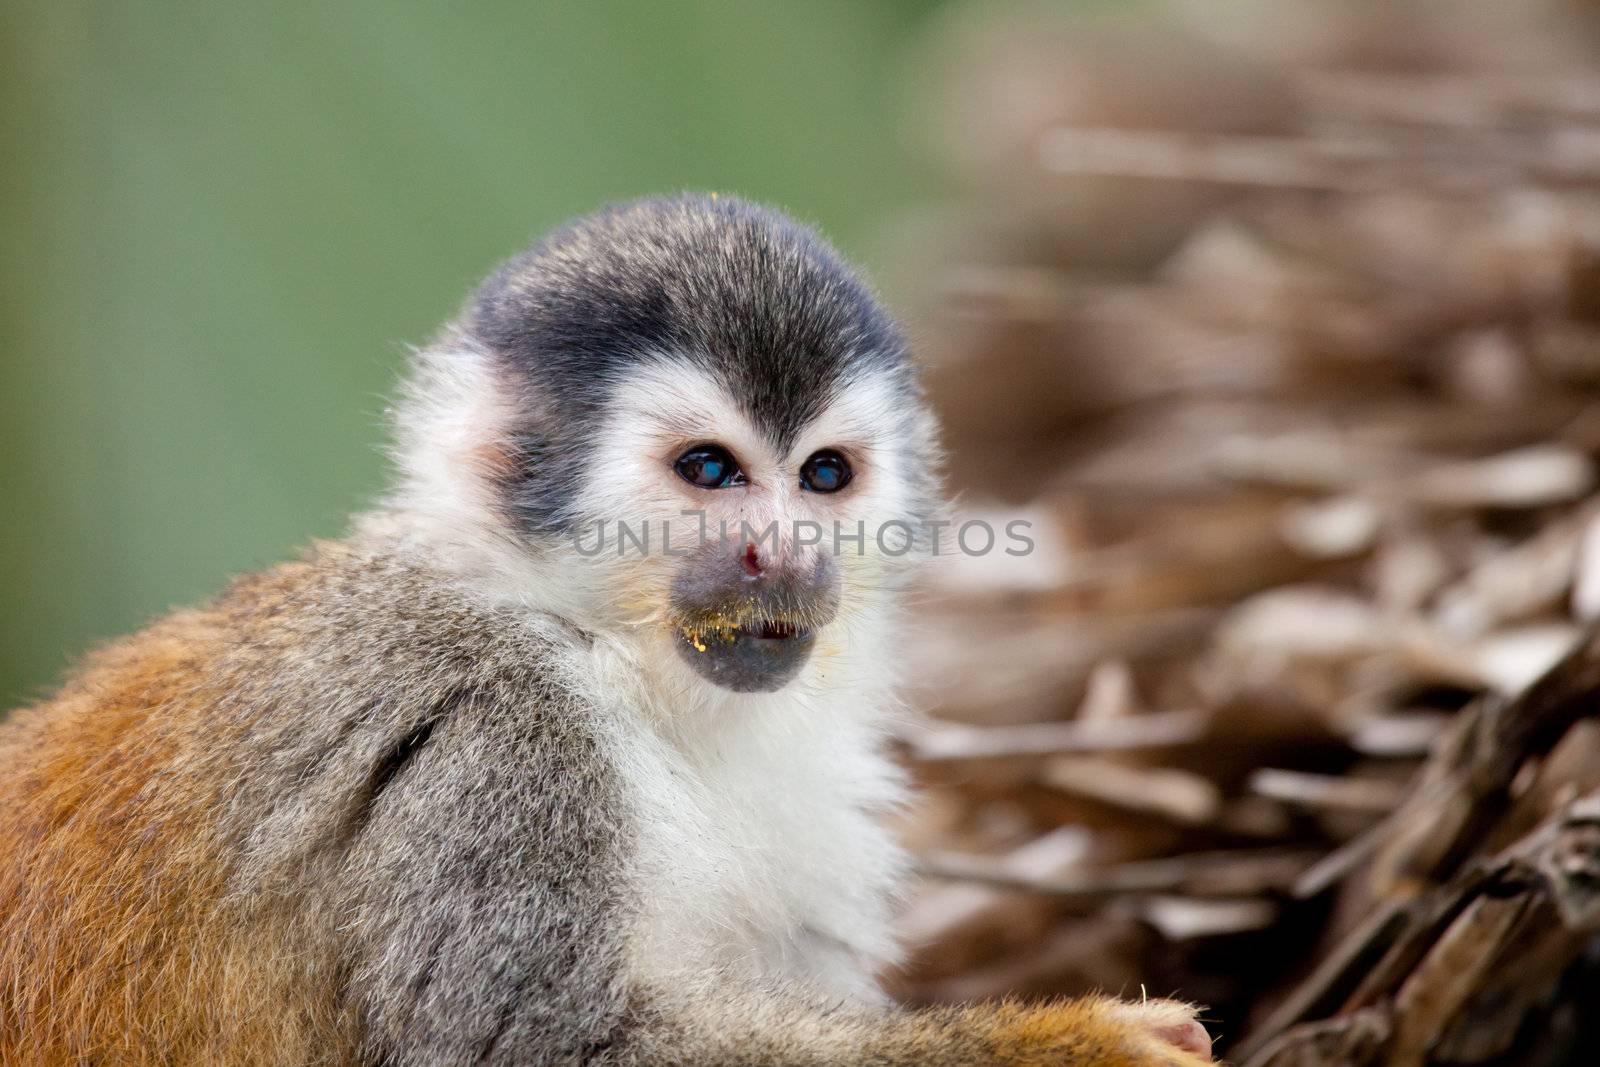 Eating squirrel monkey by Fotosmurf